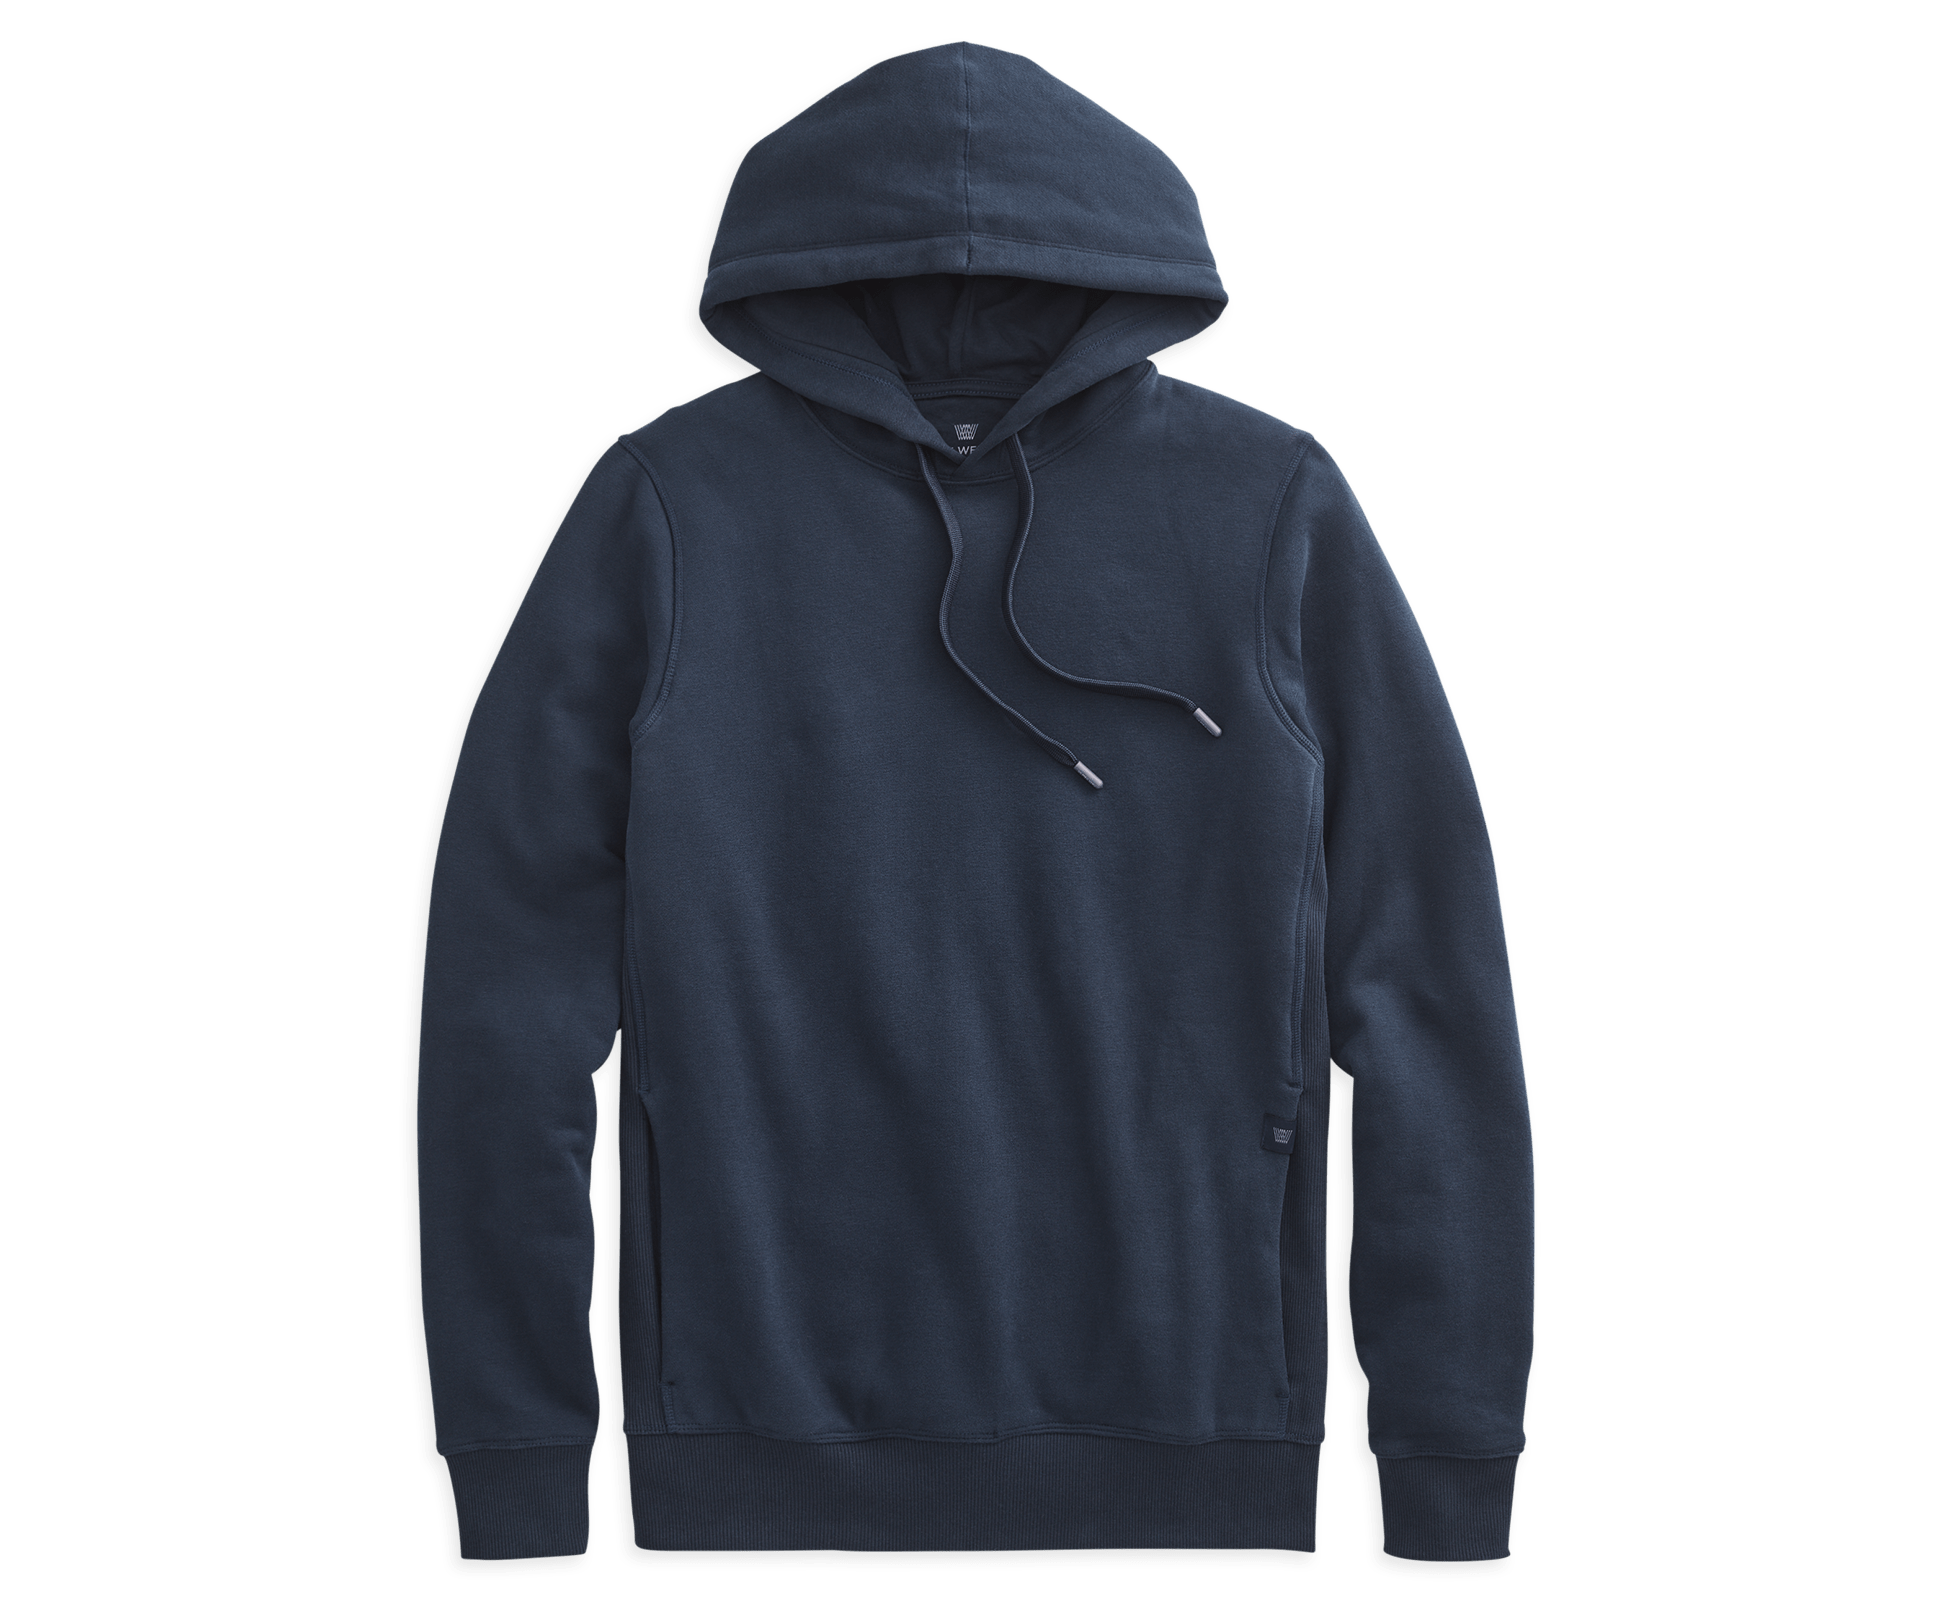 MACK WELDON Full Zip Ace Hoodie Charcoal Gray Hooded Sweatshirt Jacket L  EUC